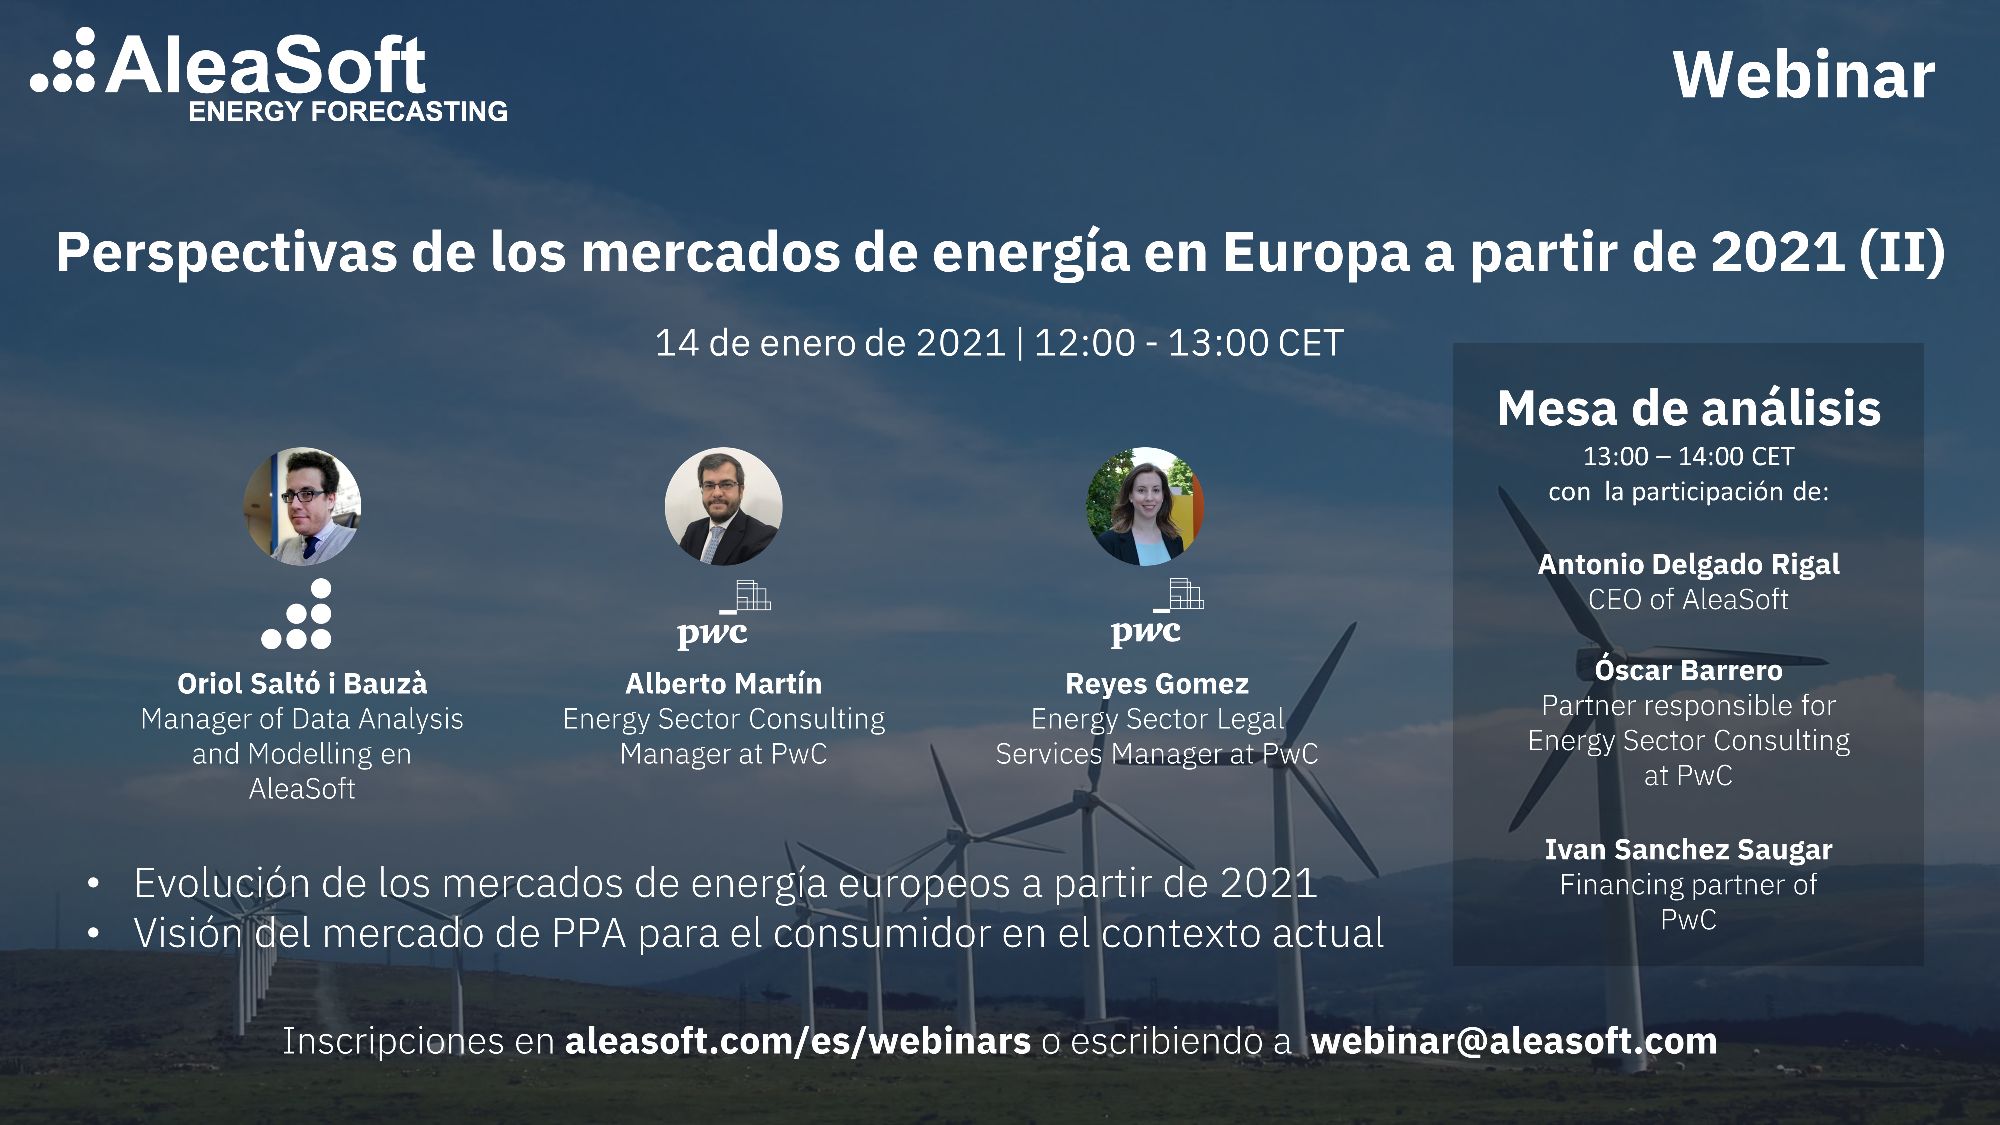 AleaSoft - Webinar Perspectivas mercados energia Europa